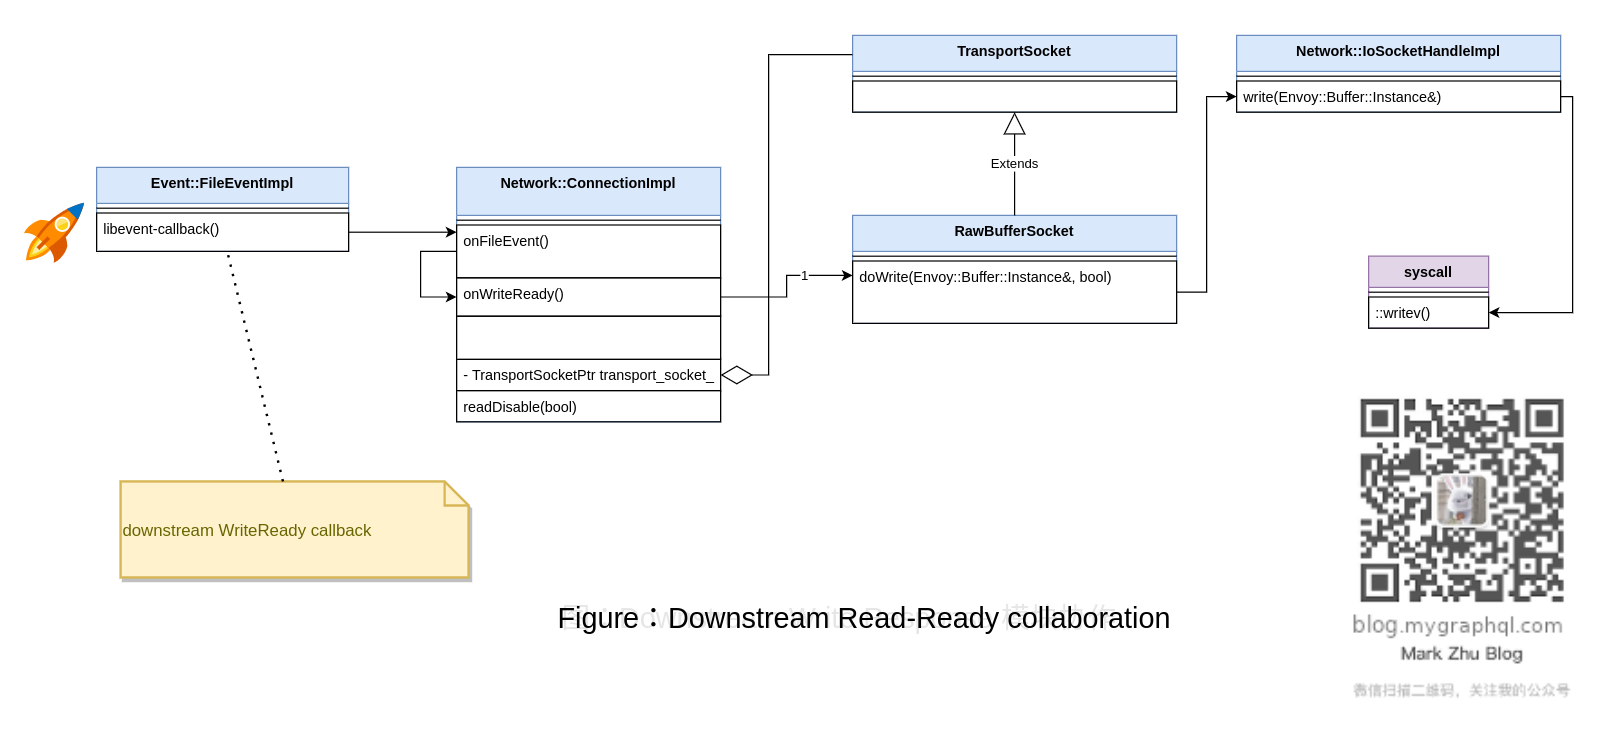 Figure: Downstream Write Response Collaboration